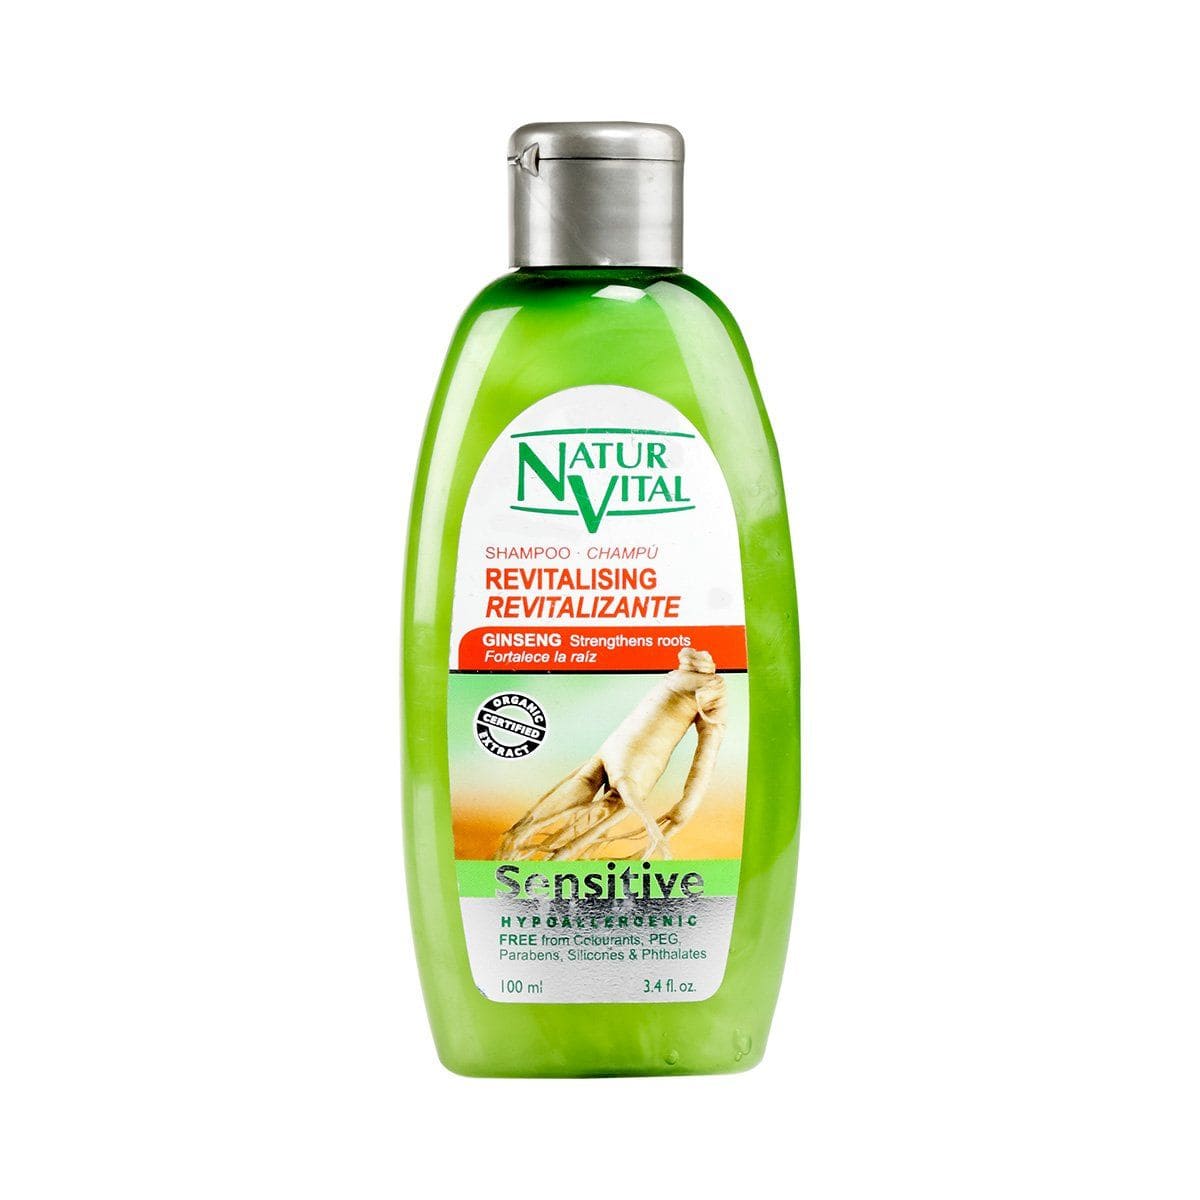 Natur Vital Sensitive Shampoo Revitalizing 100ml